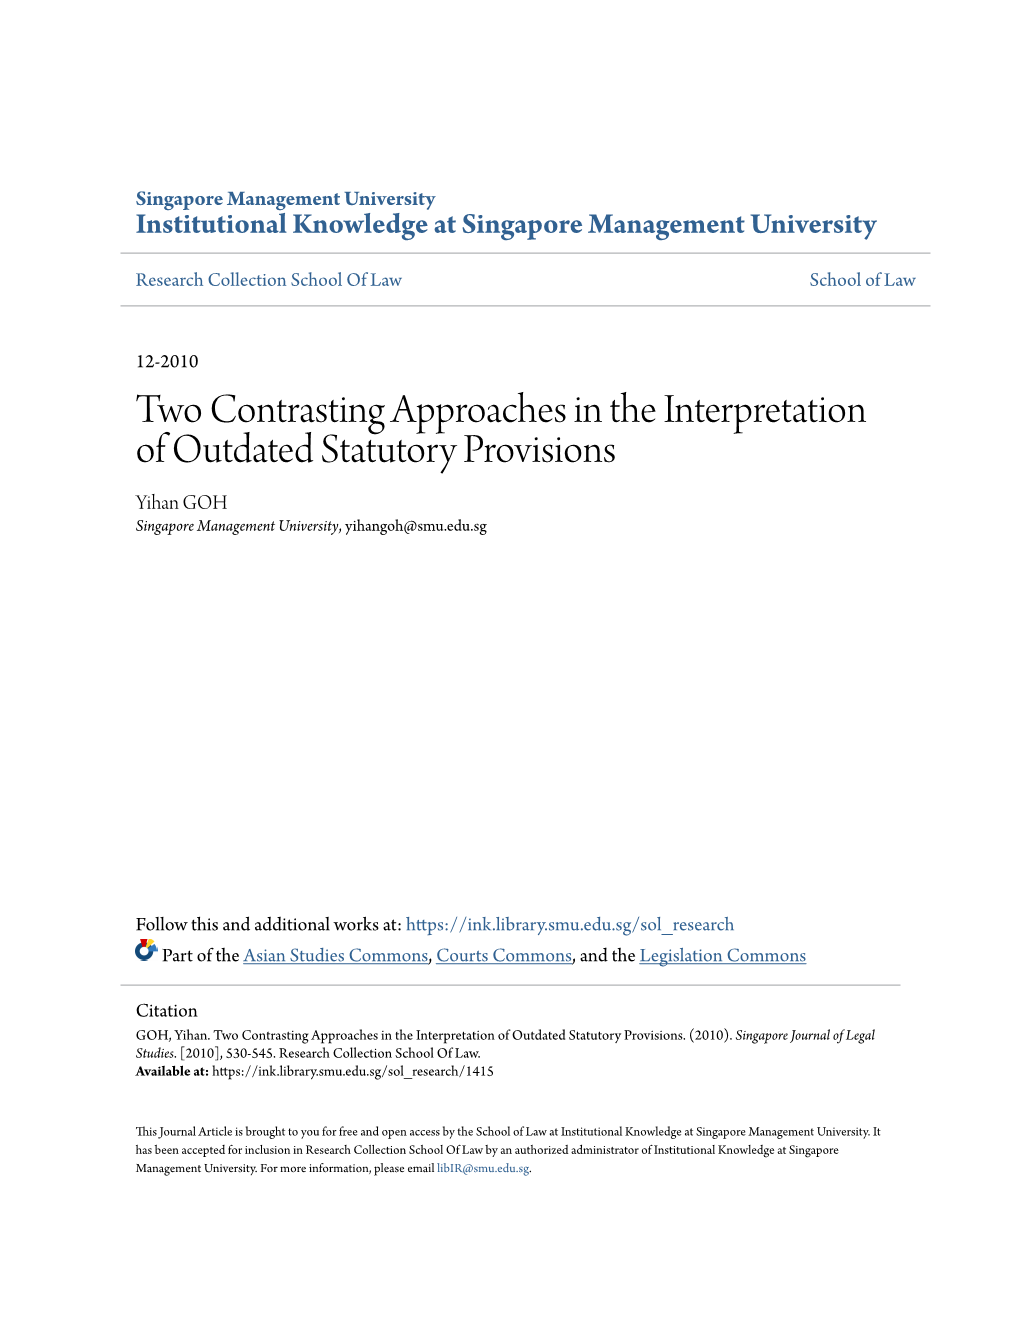 Two Contrasting Approaches in the Interpretation of Outdated Statutory Provisions Yihan GOH Singapore Management University, Yihangoh@Smu.Edu.Sg